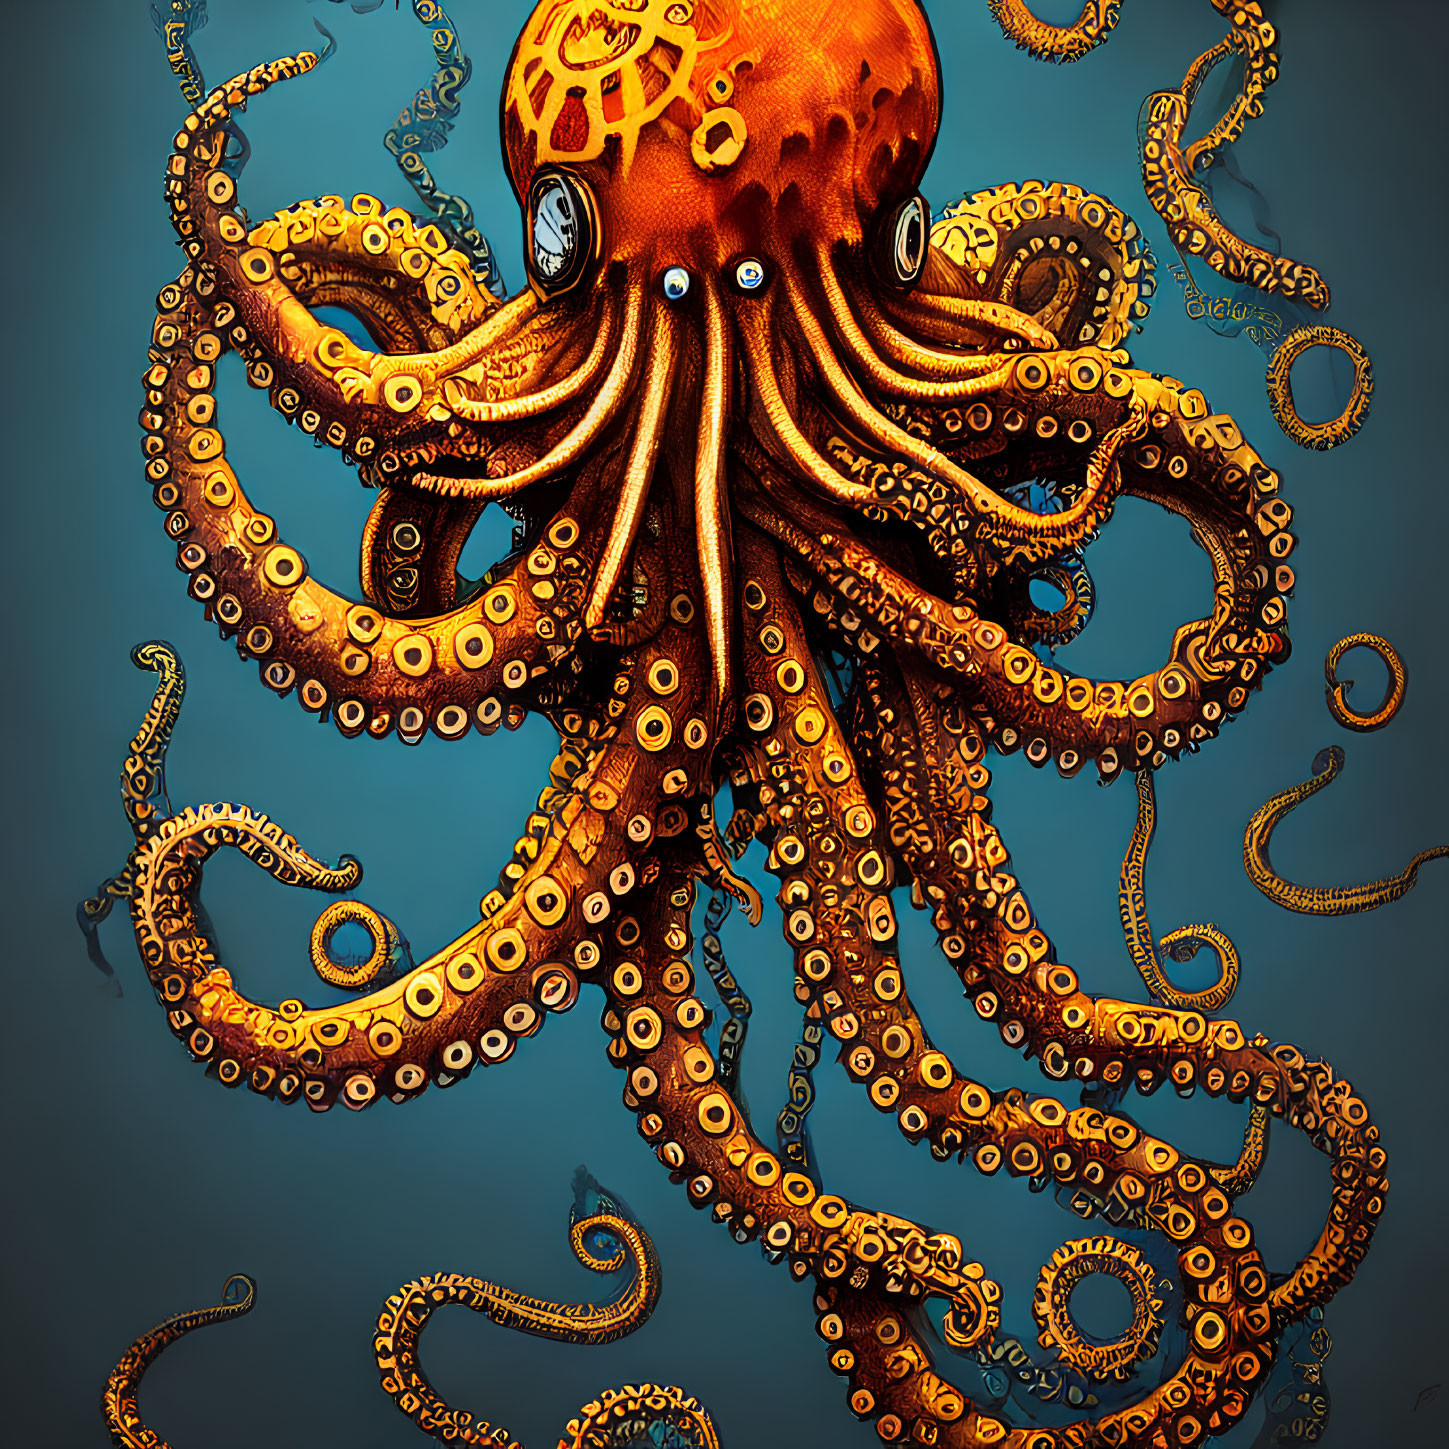 Detailed orange octopus illustration on blue background